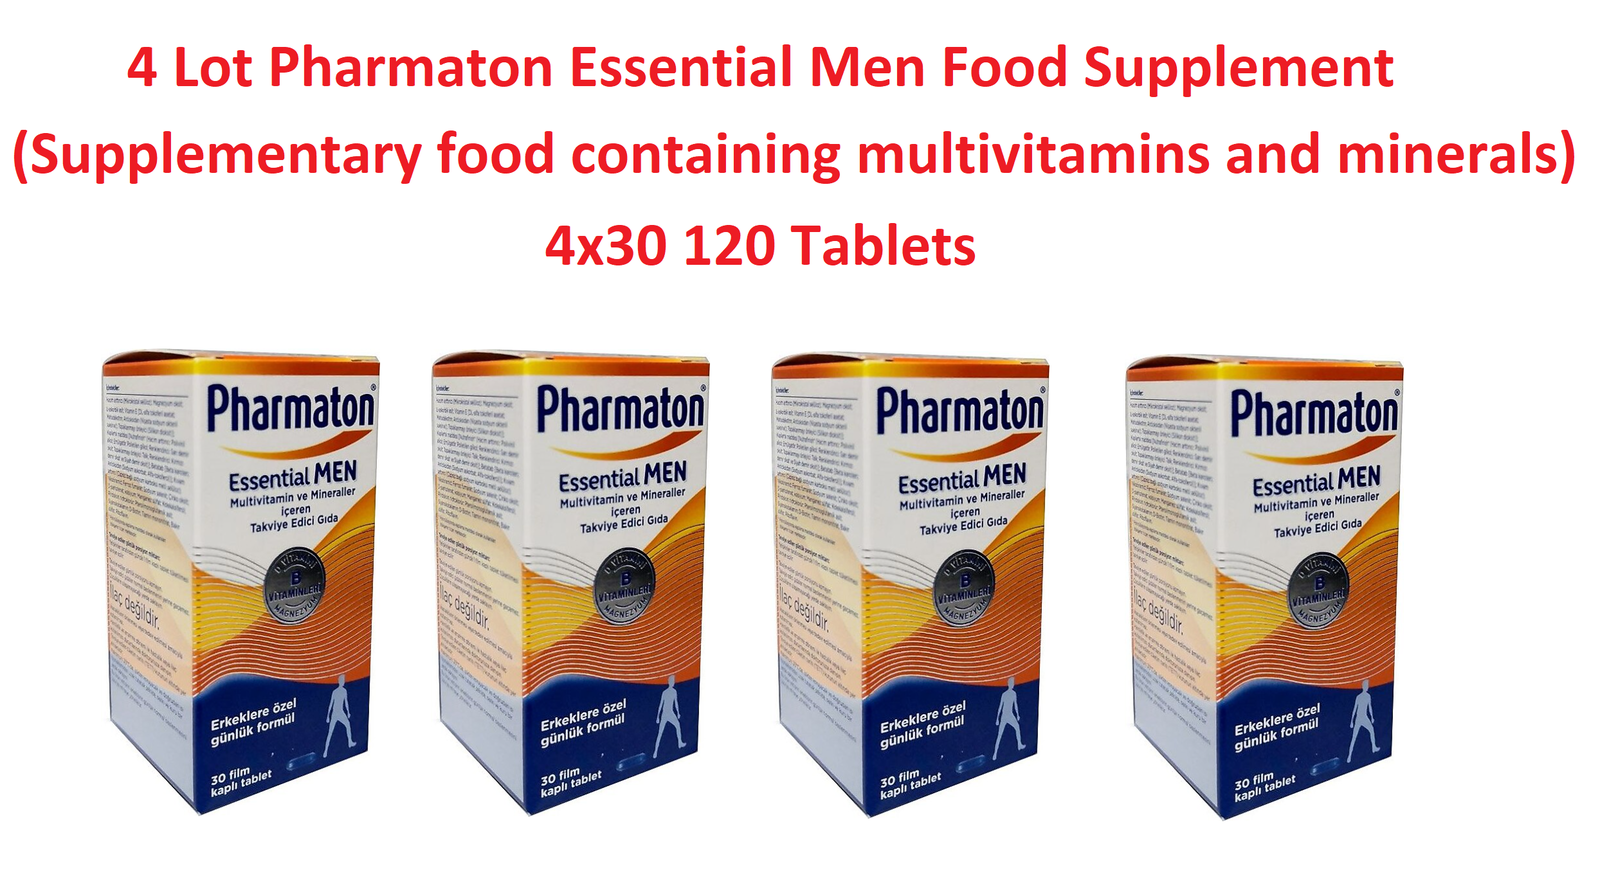 4 Lot Pharmaton Essential Men Food Supplement 4x30 Tablets (120 Tablets) NEW